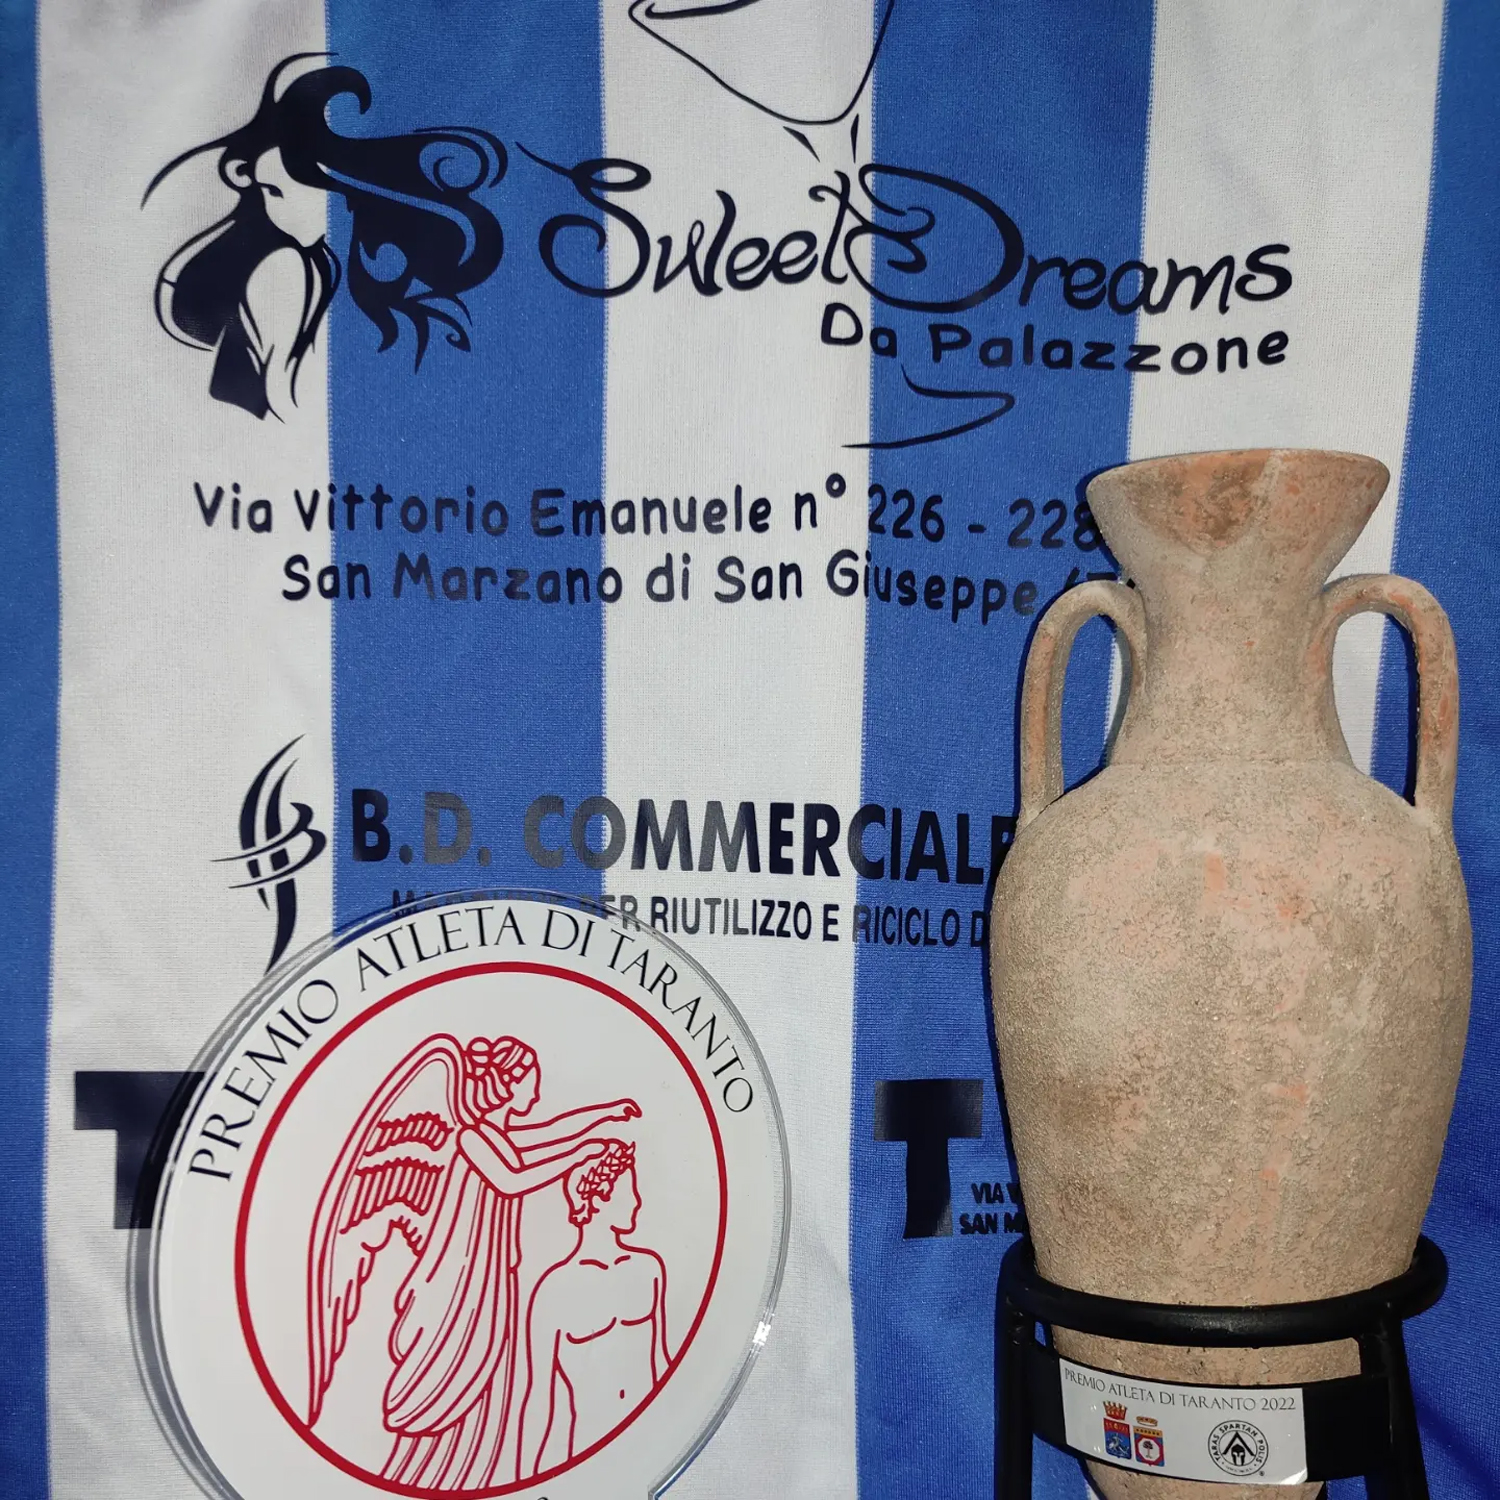 La WFC GROTTAGLIE riceve i premi “Atleta di Taranto” premiata Società e mister Bommino